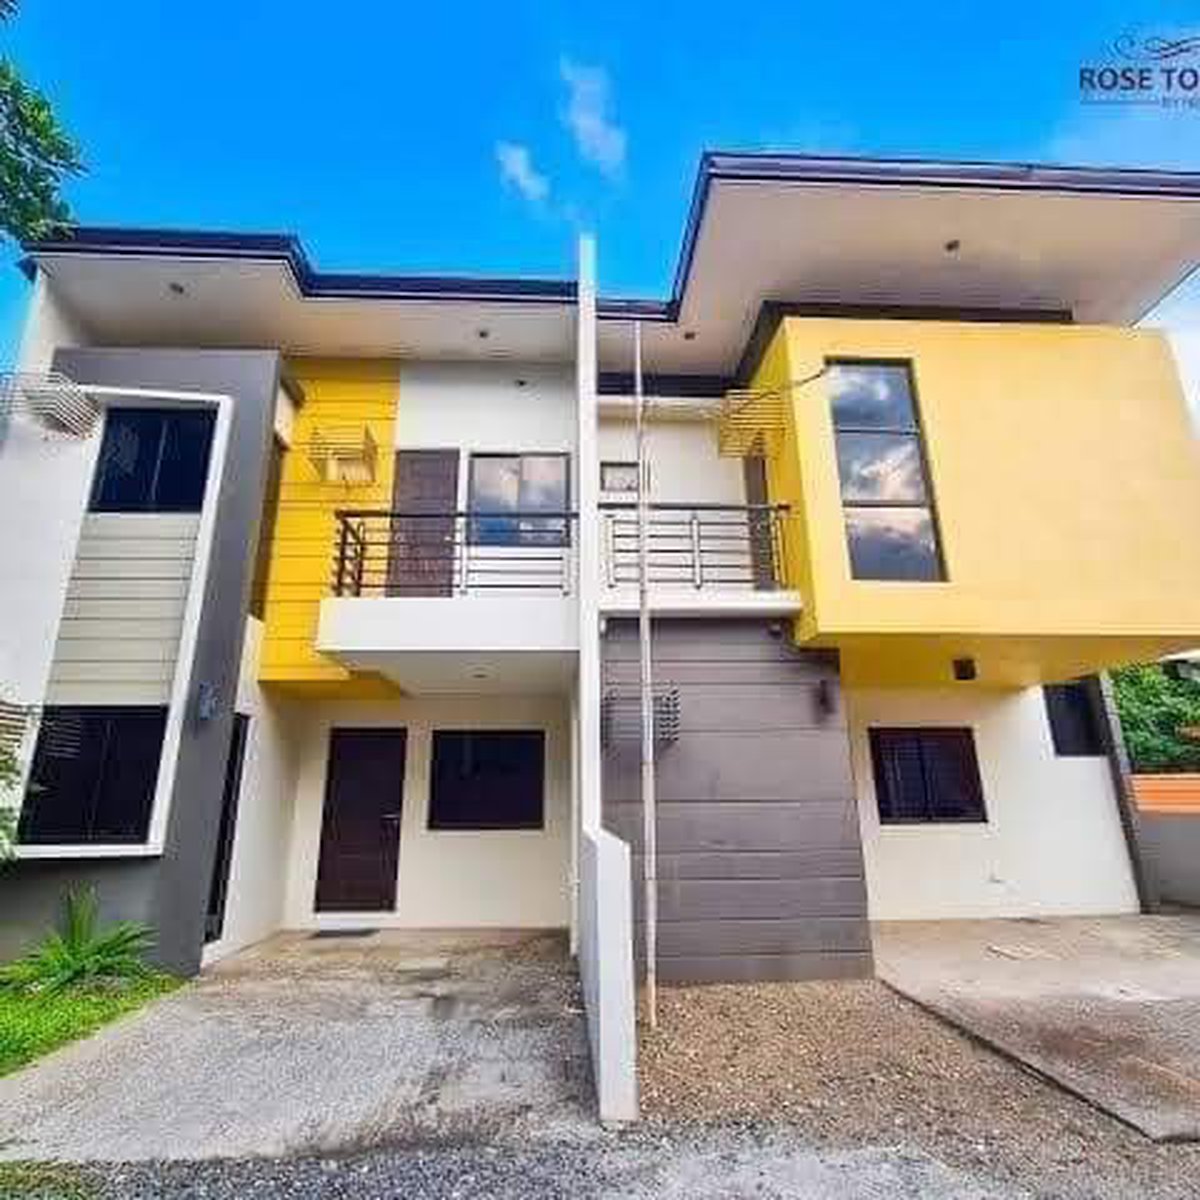 4-bedroom Townhouse For Sale in Minglanilla Cebu